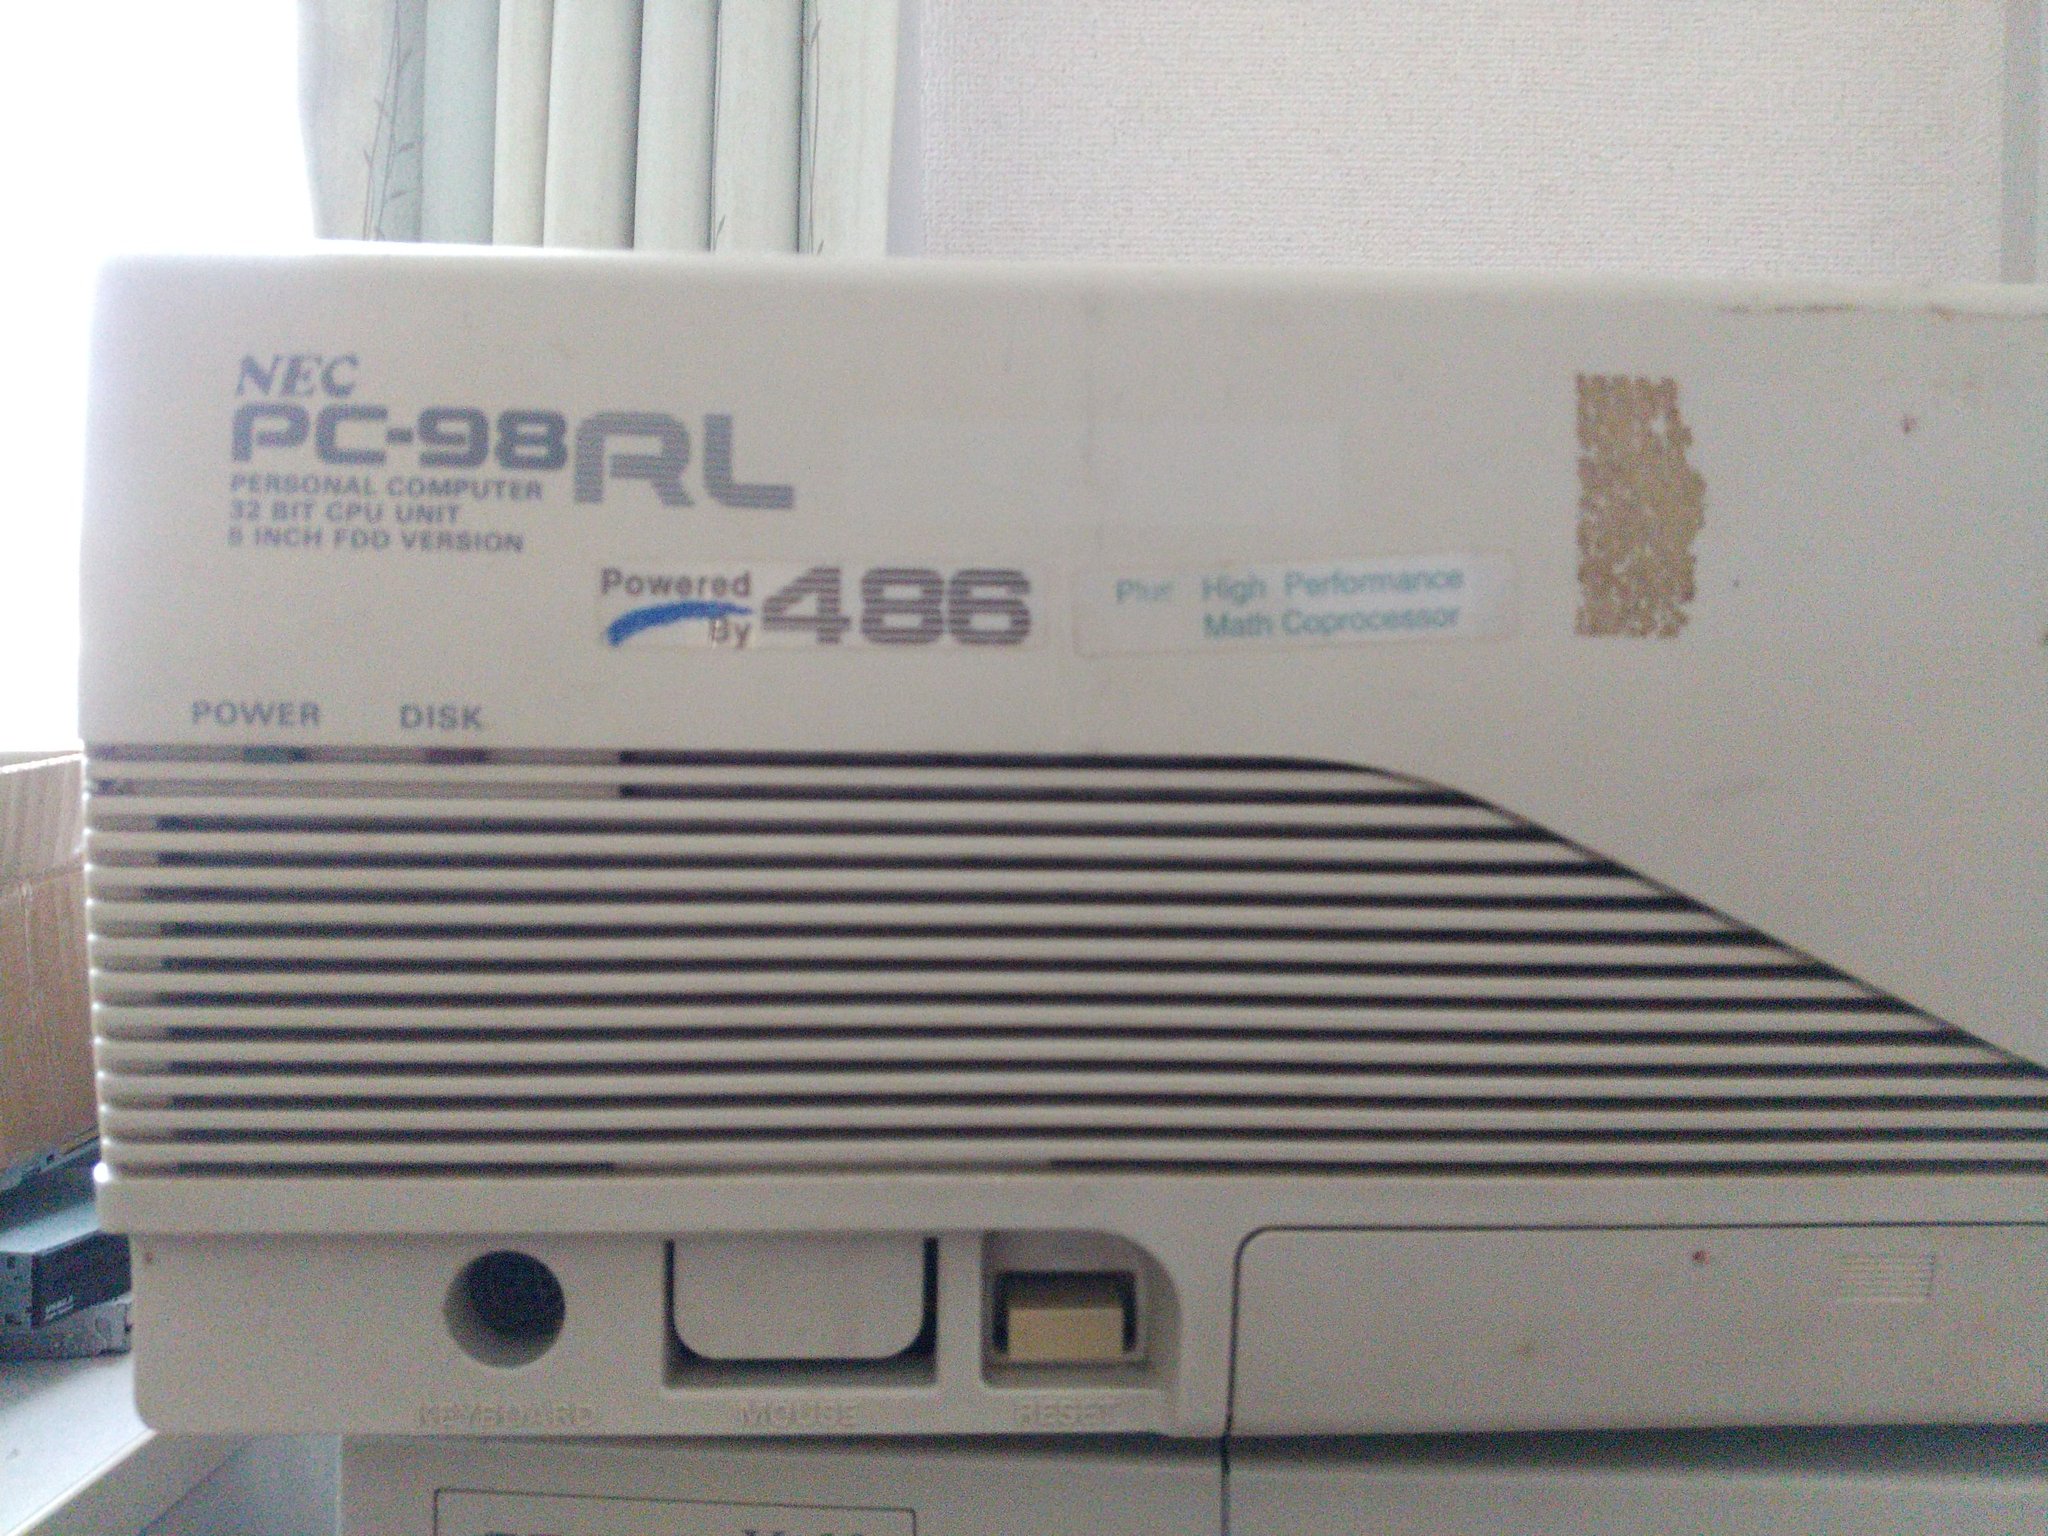 PC-98ステーション Rev.21.03 / Twitter